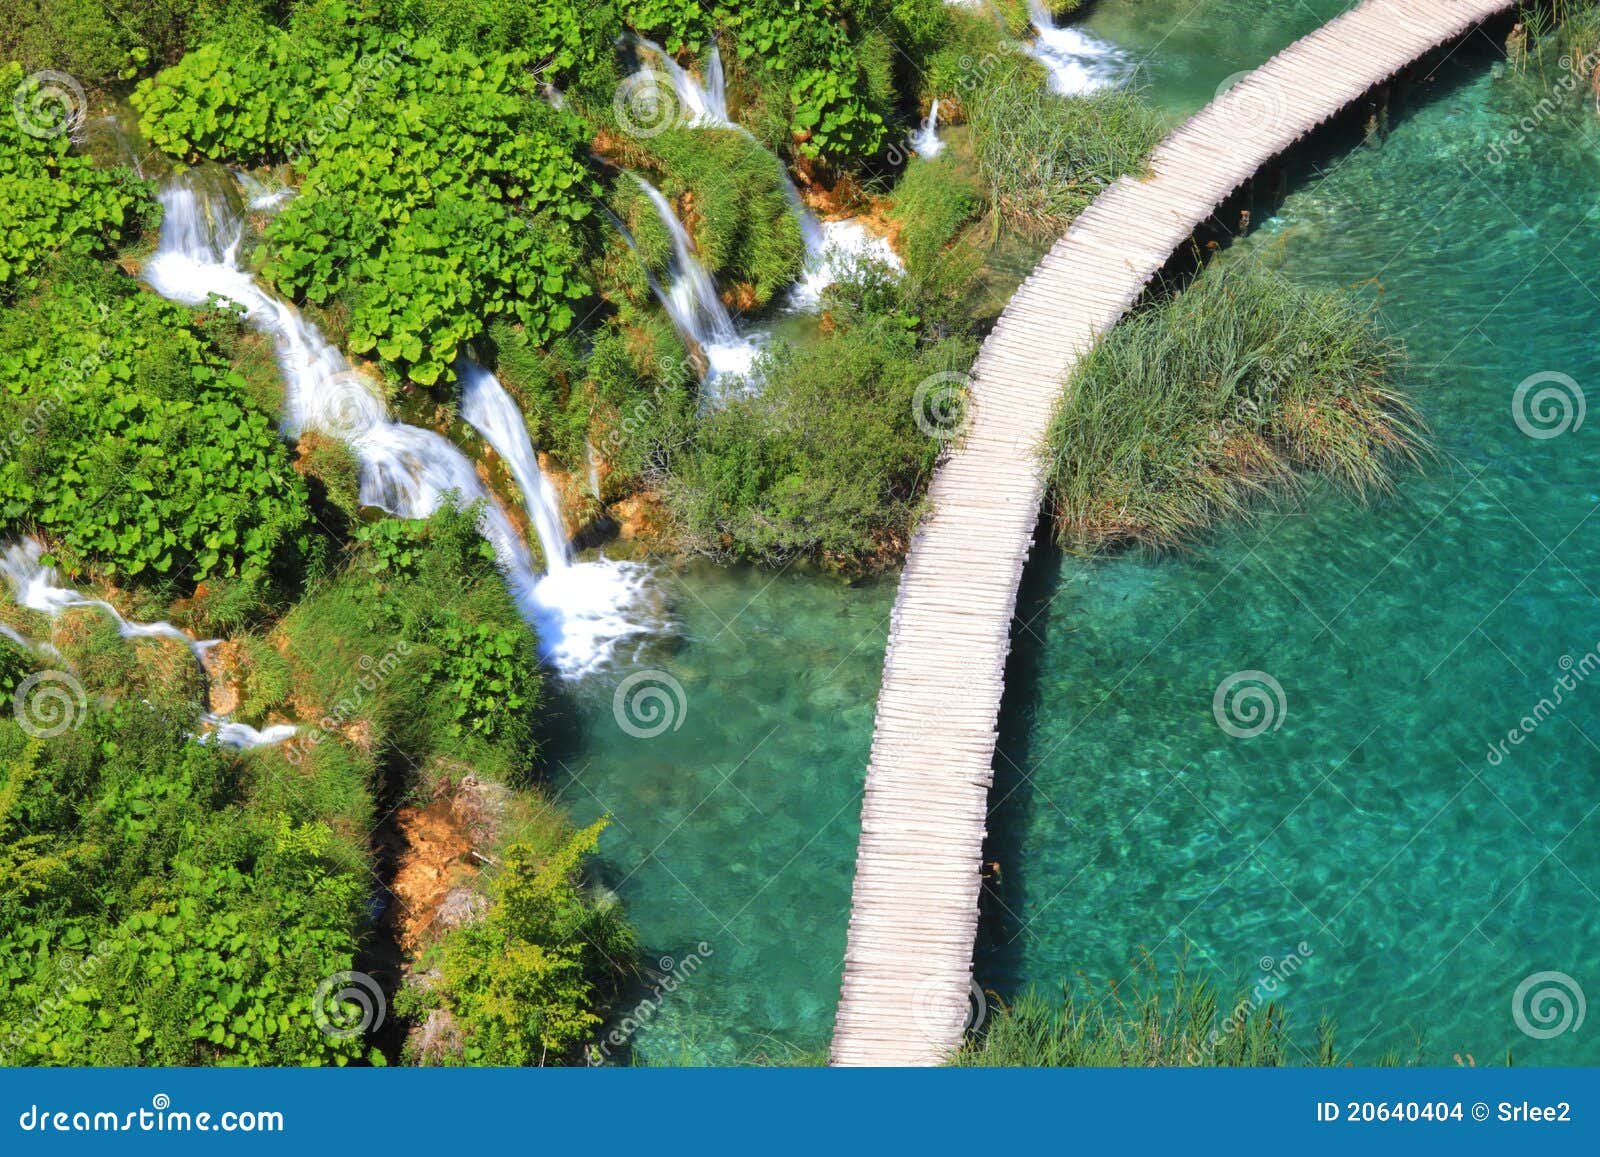 plitvicka jezera, croatia